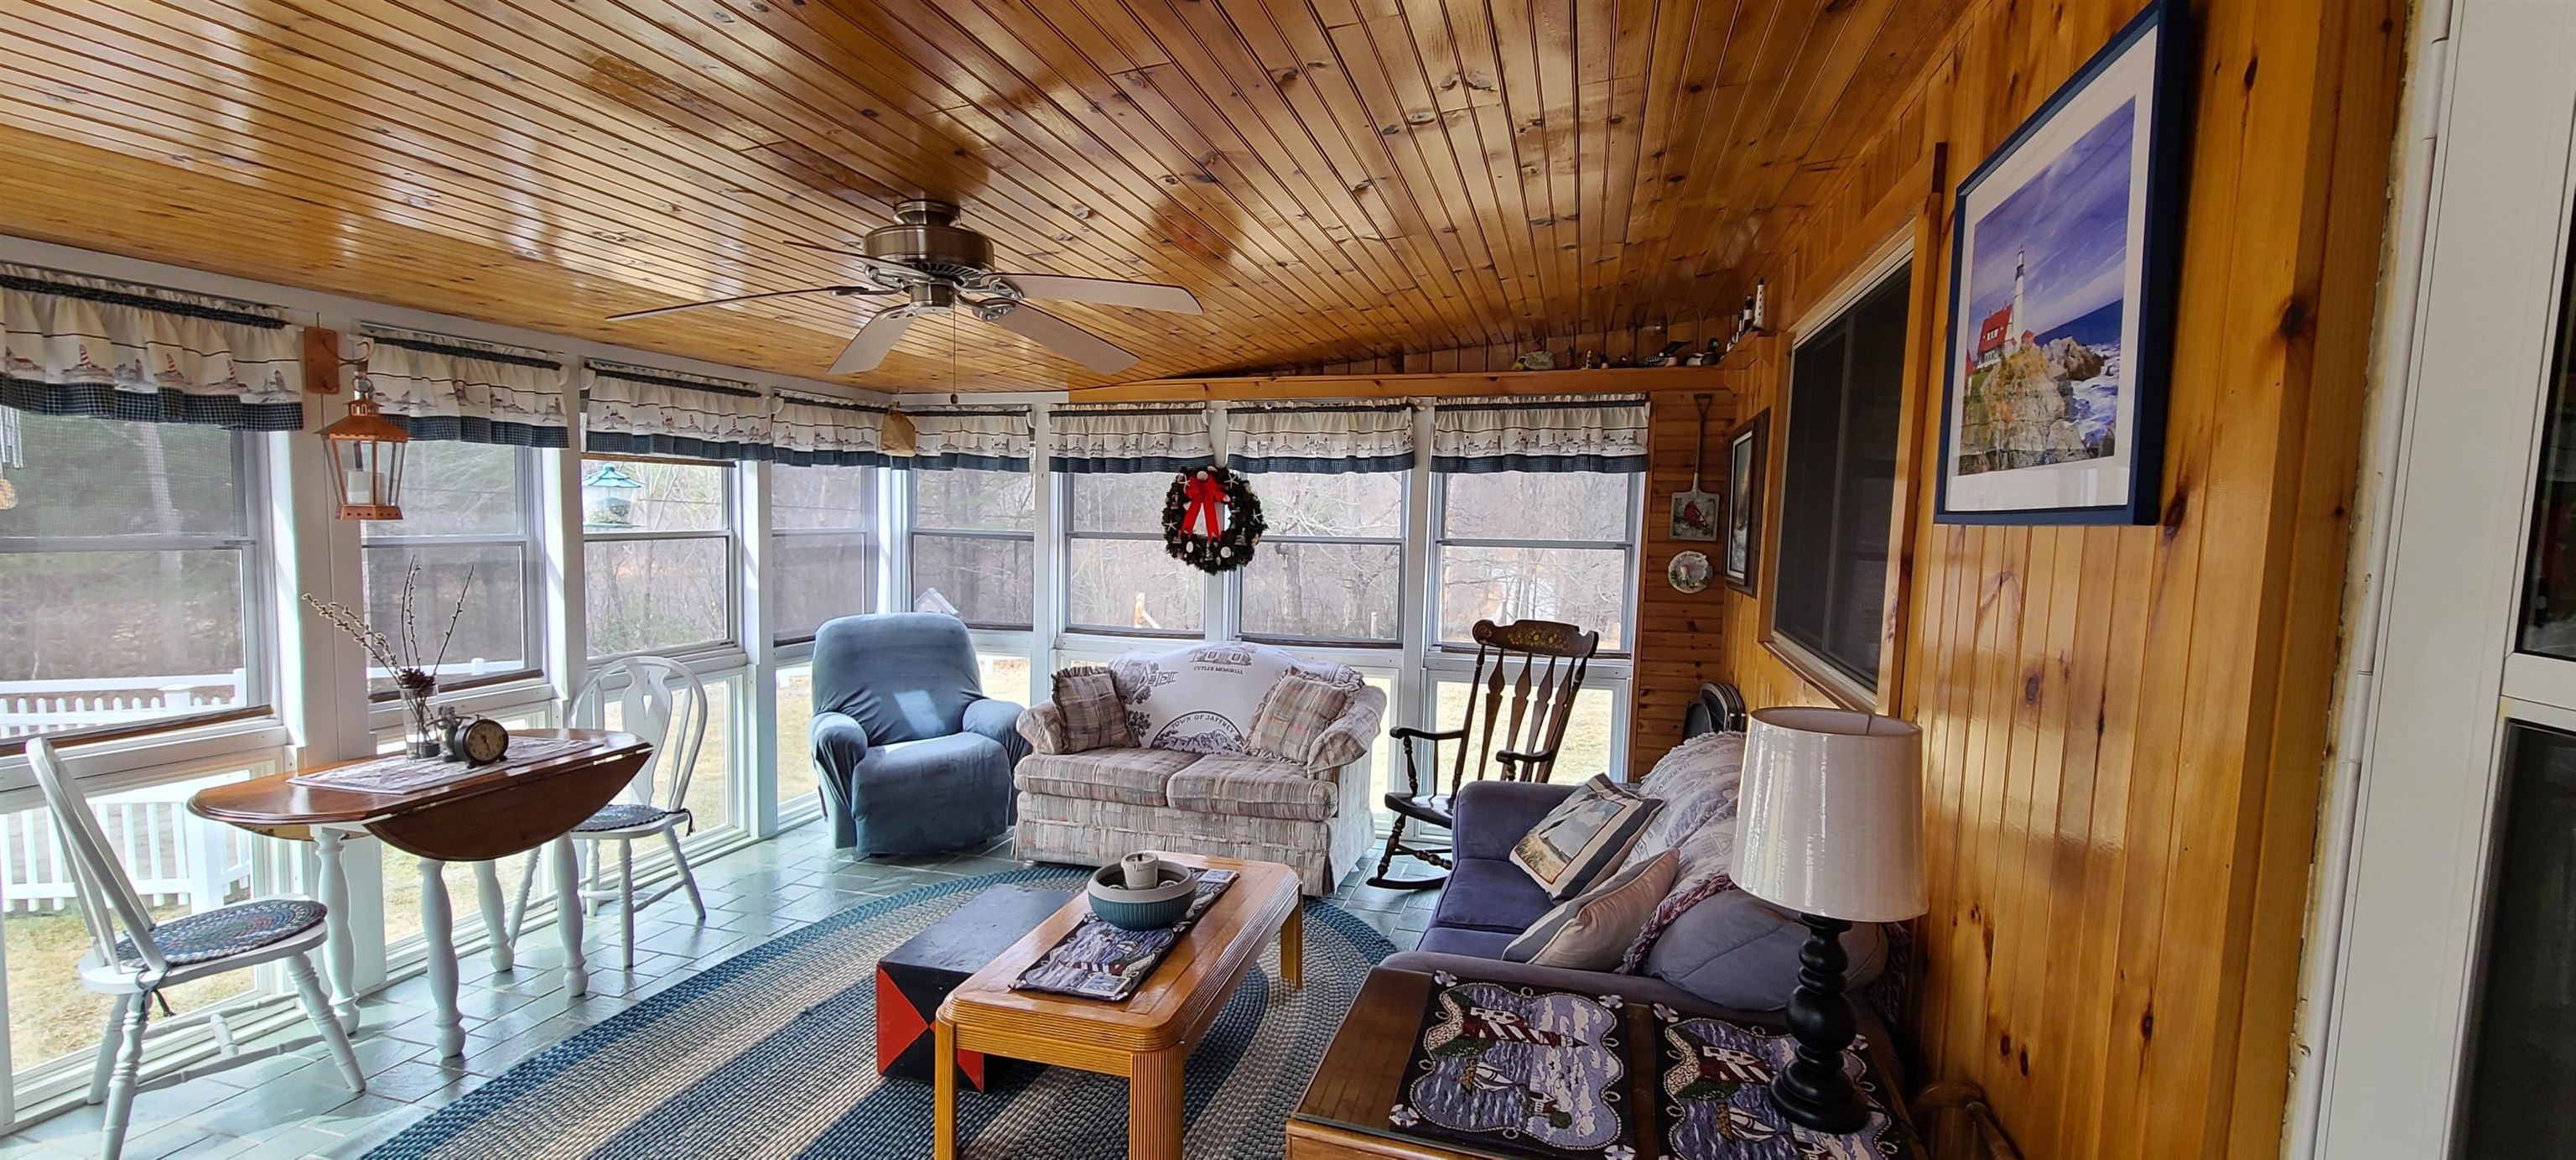 Enclosed, wood ceiling porch